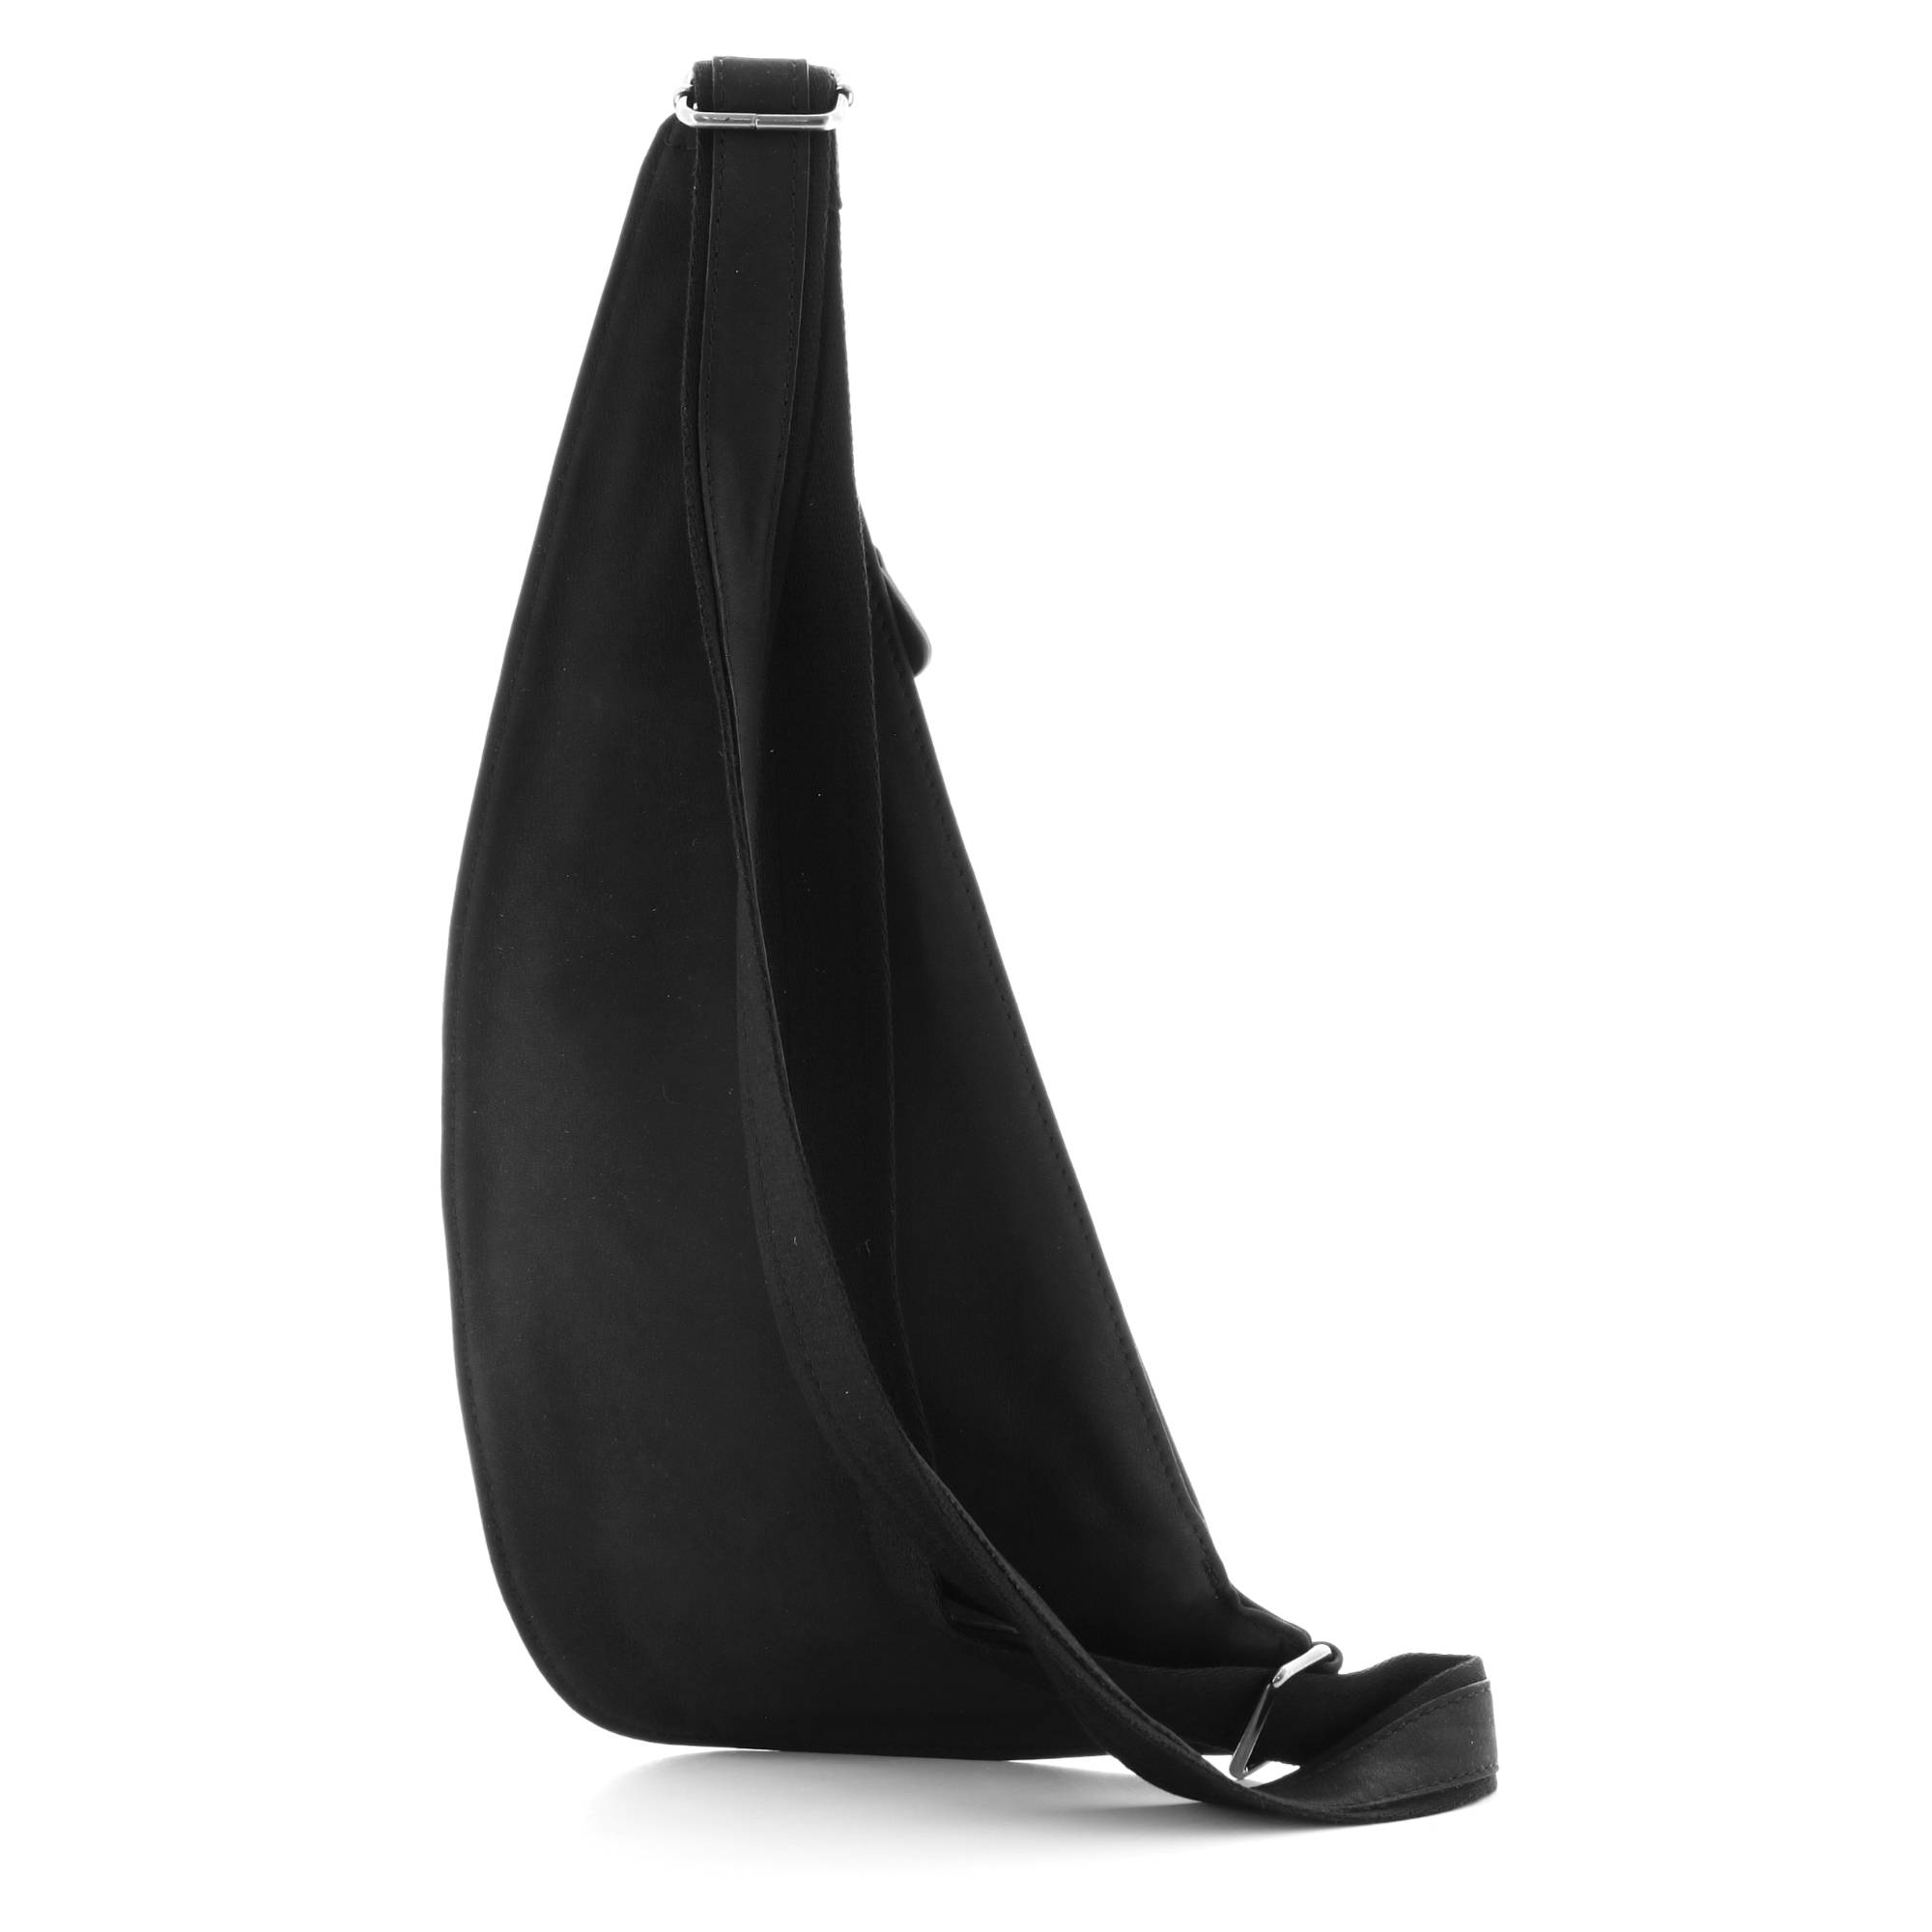 Sacoche bandoulière Francinel en cuir collection Bilbao couleur noir vue de dos